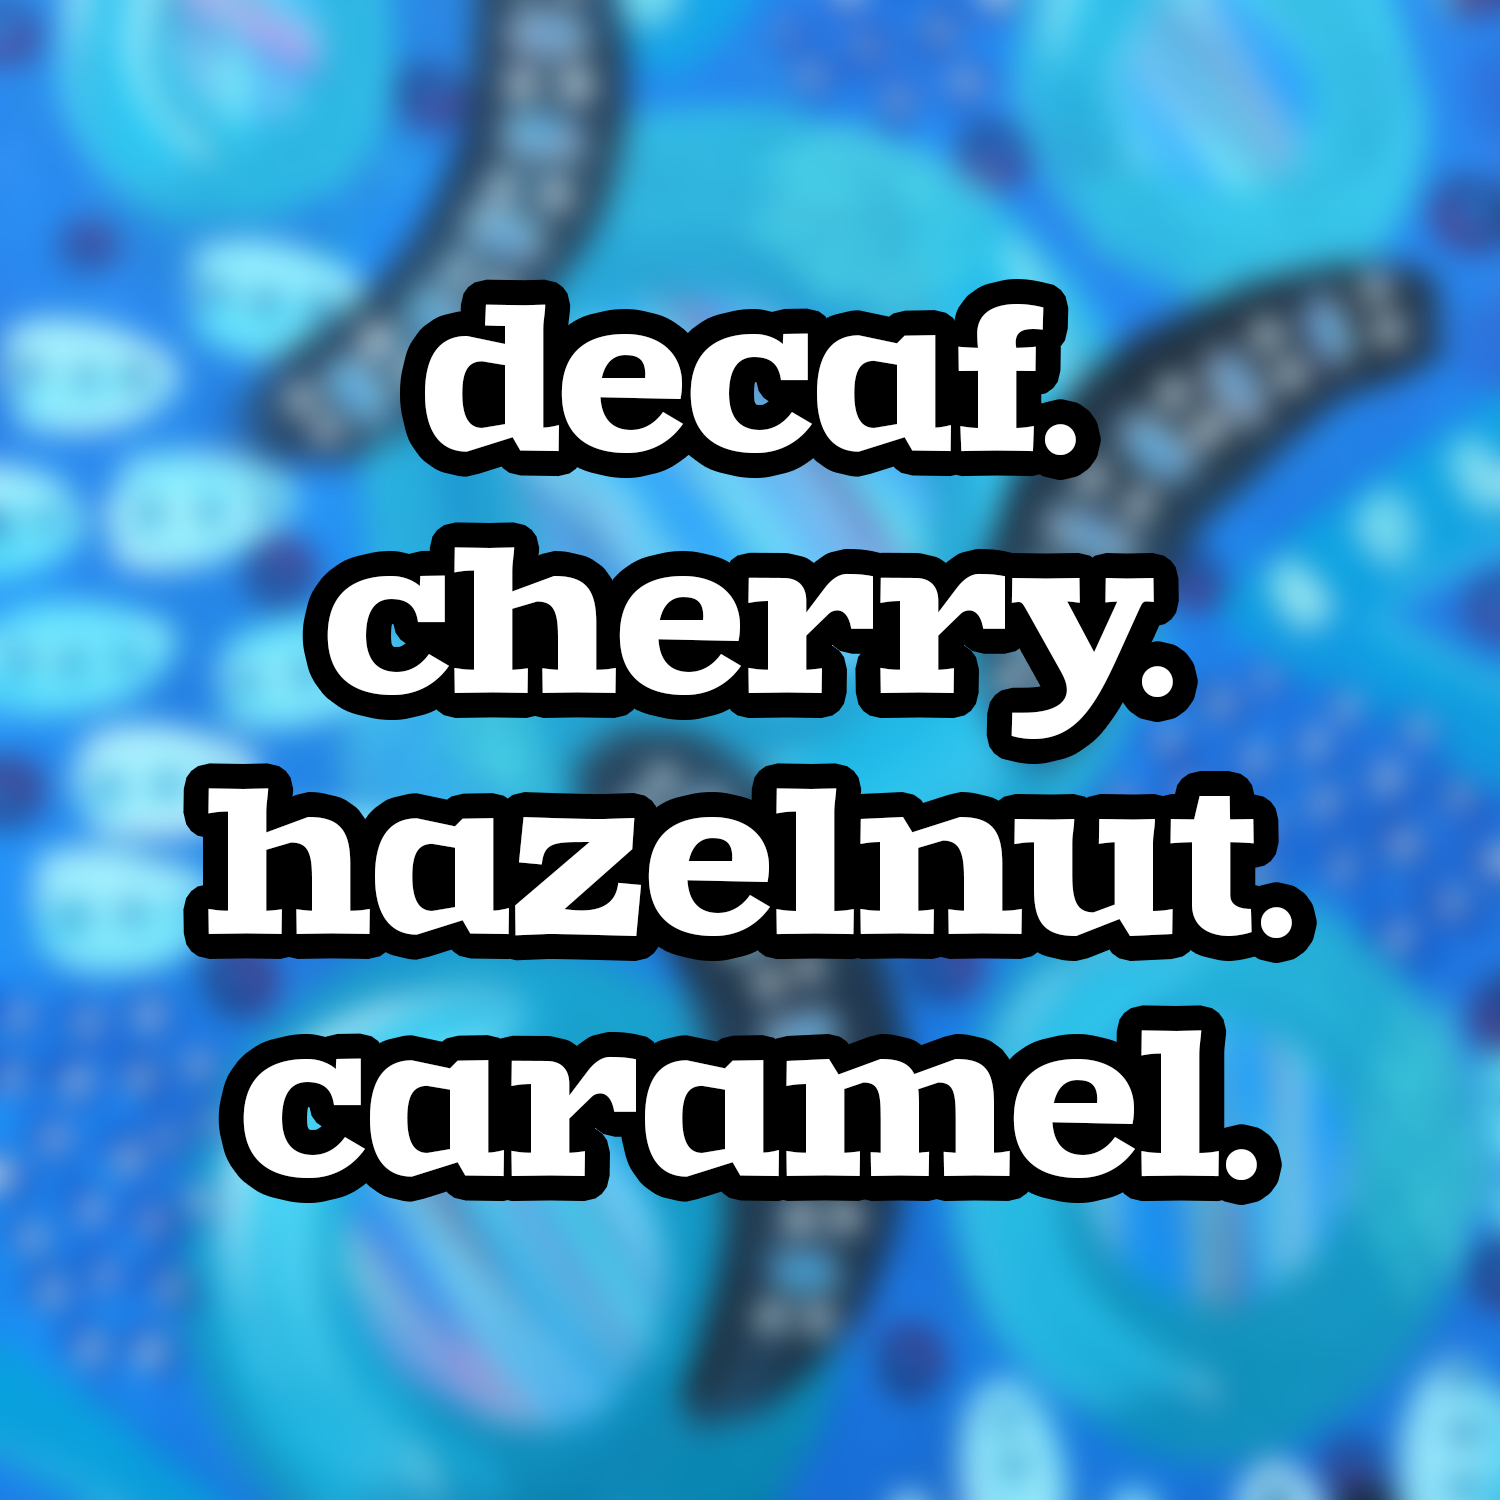 The tasting notes from Bizarre Coffee's Decaf Medium Roast: cherry, hazelnut, caramel. 